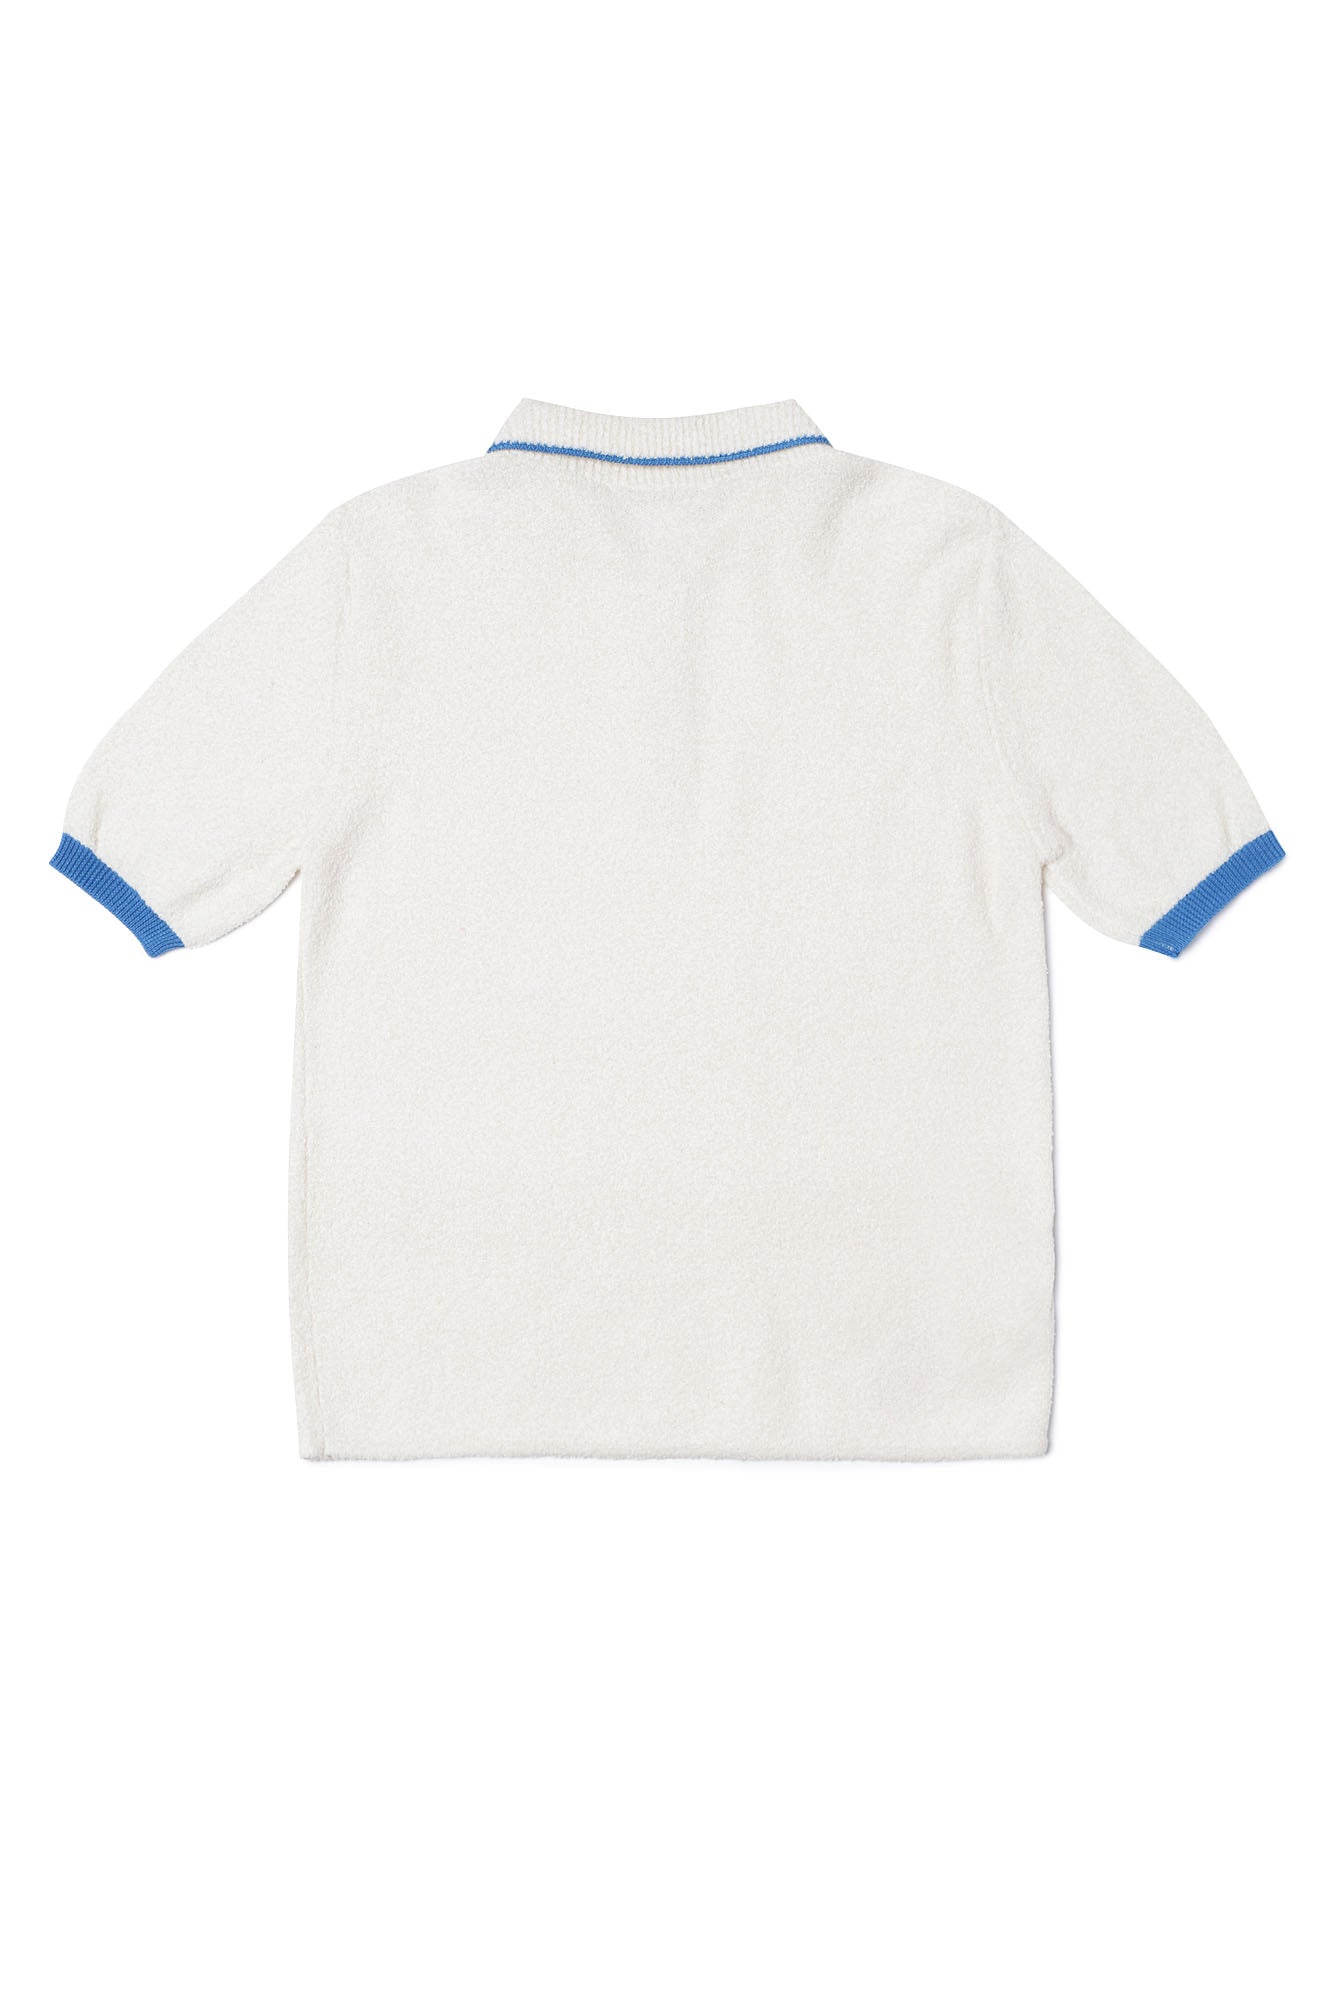 Girls White Knit Shirt